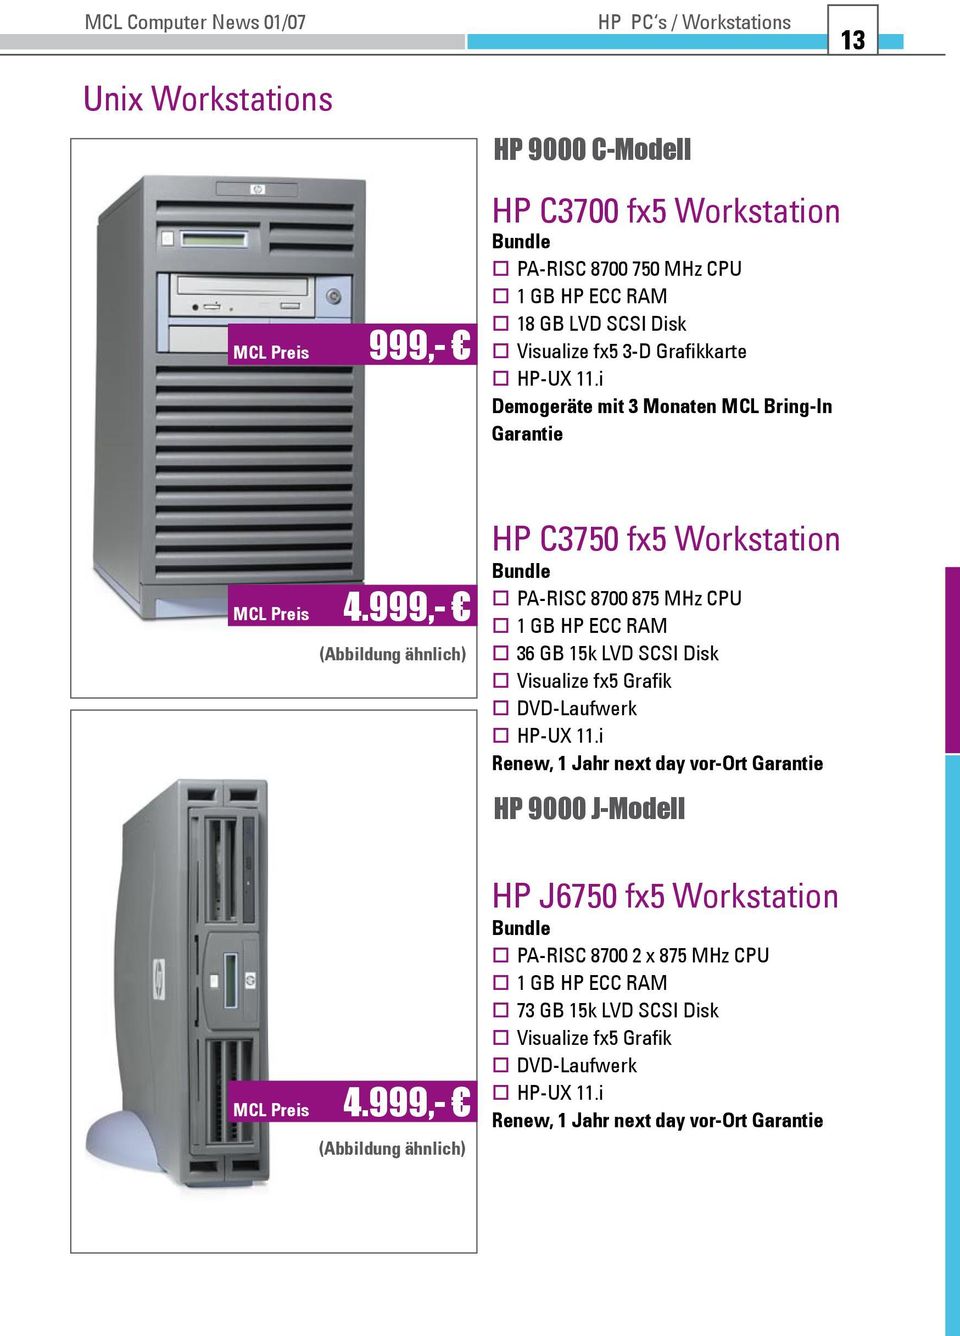 999,- HP C3750 fx5 Workstation Bundle PA-RISC 8700 875 MHz CPU 1 GB HP ECC RAM 36 GB 15k LVD SCSI Disk Visualize fx5 Grafik DVD-Laufwerk HP-UX 11.